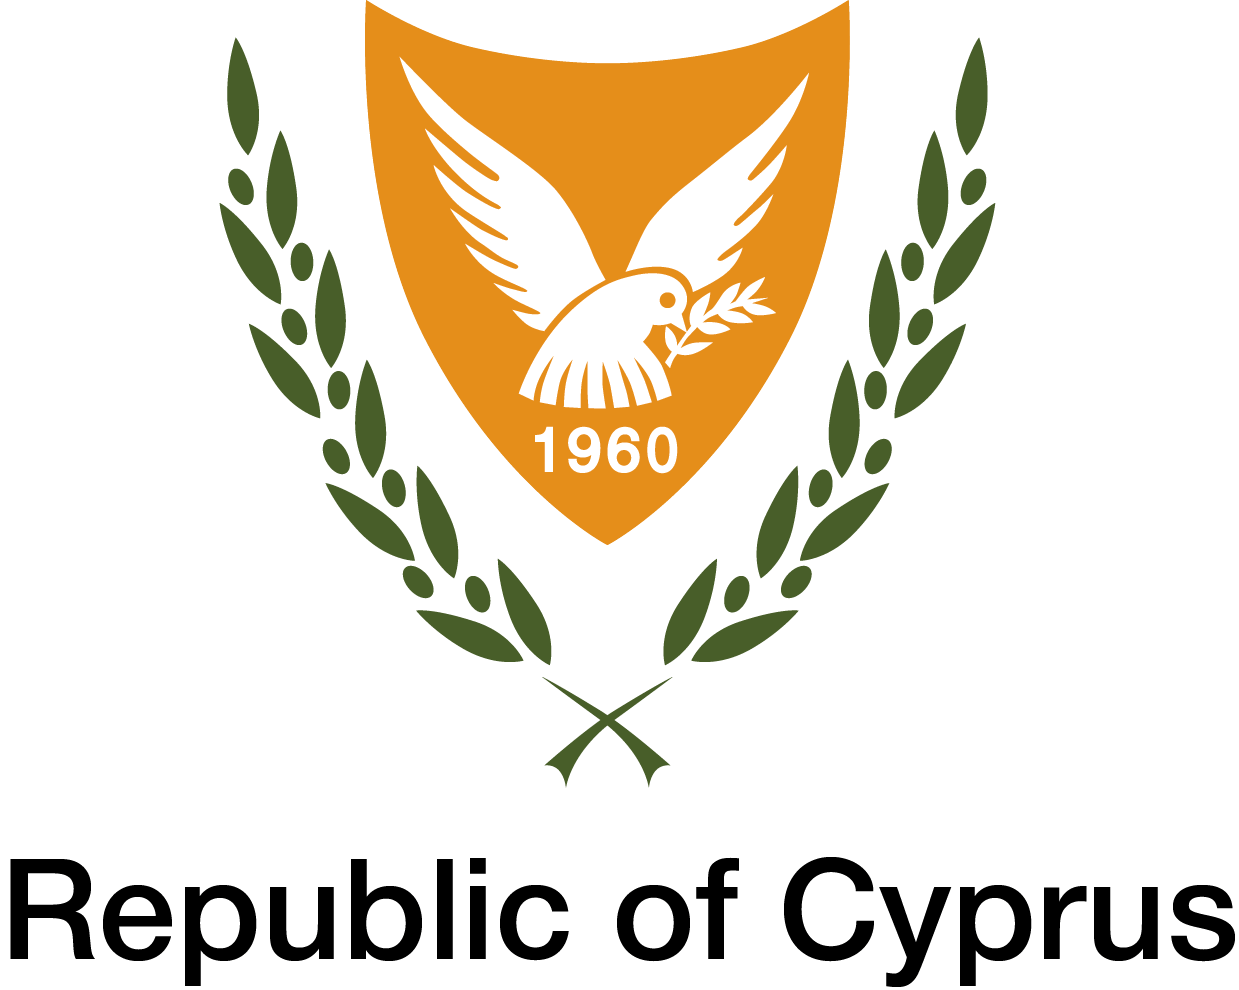 Cyprus Republic